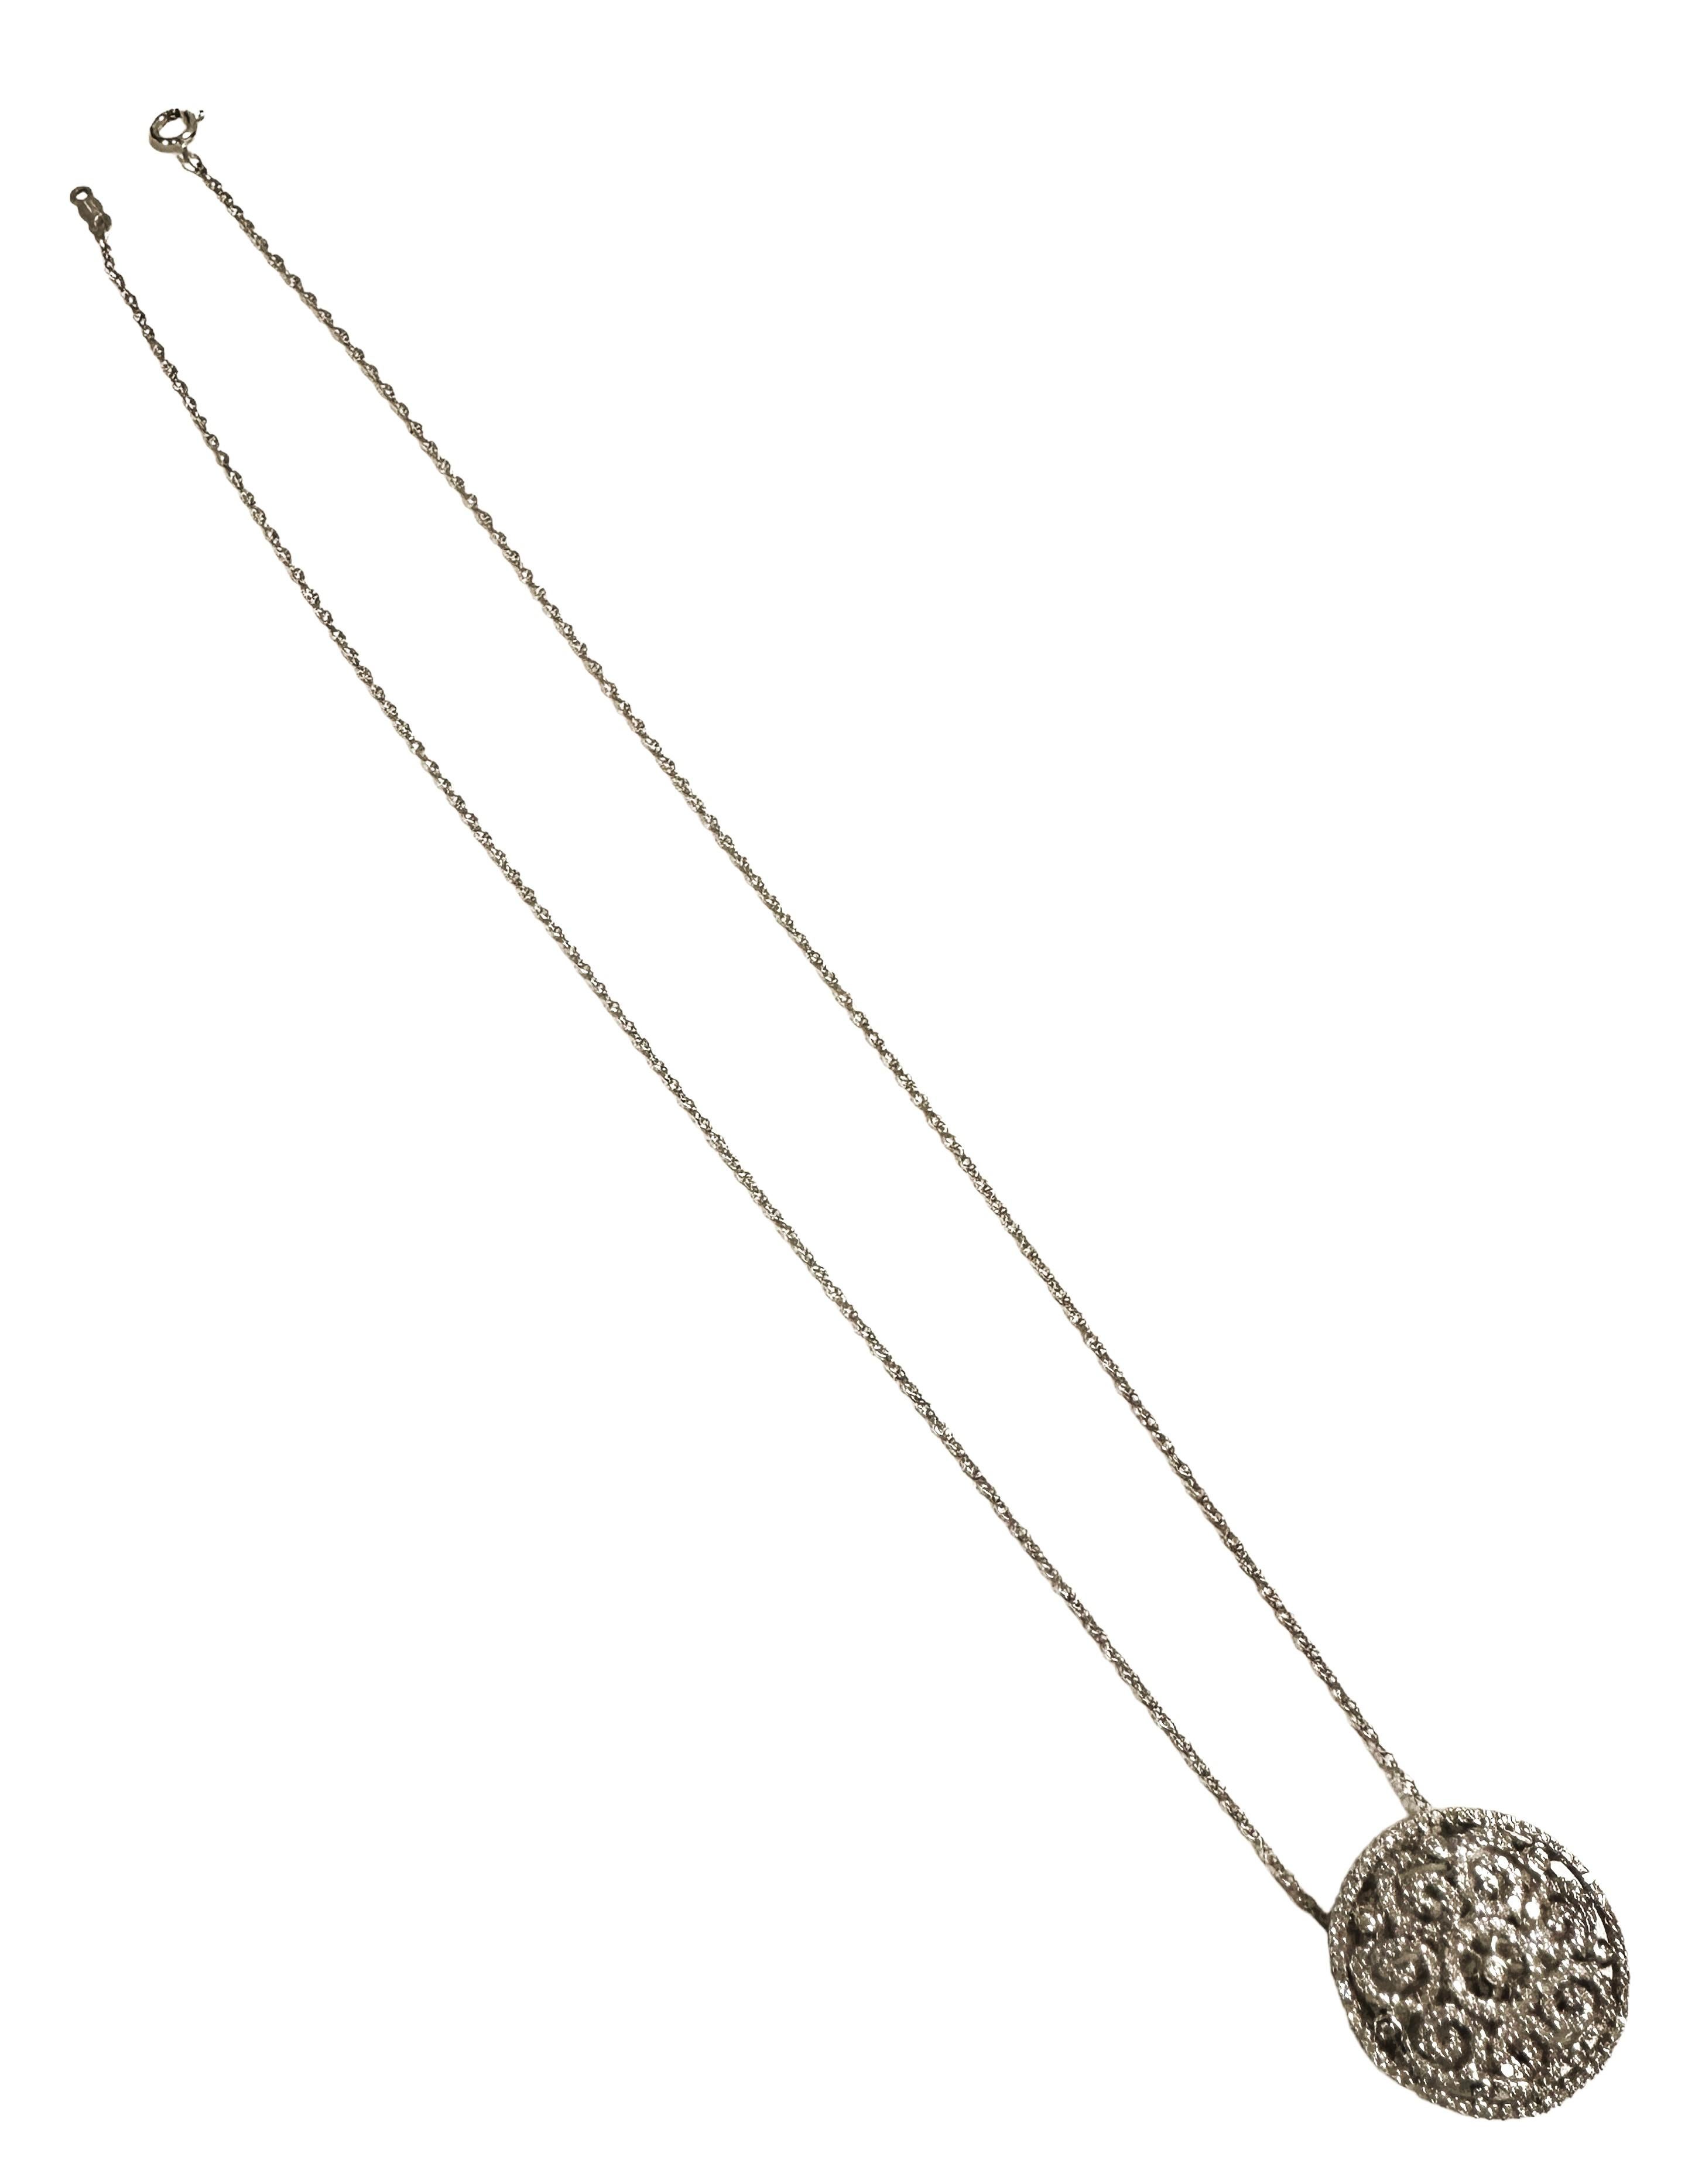 Brilliant Cut 14k White Gold 2 Carat Diamond Scroll Pendant Necklace with Appraisal